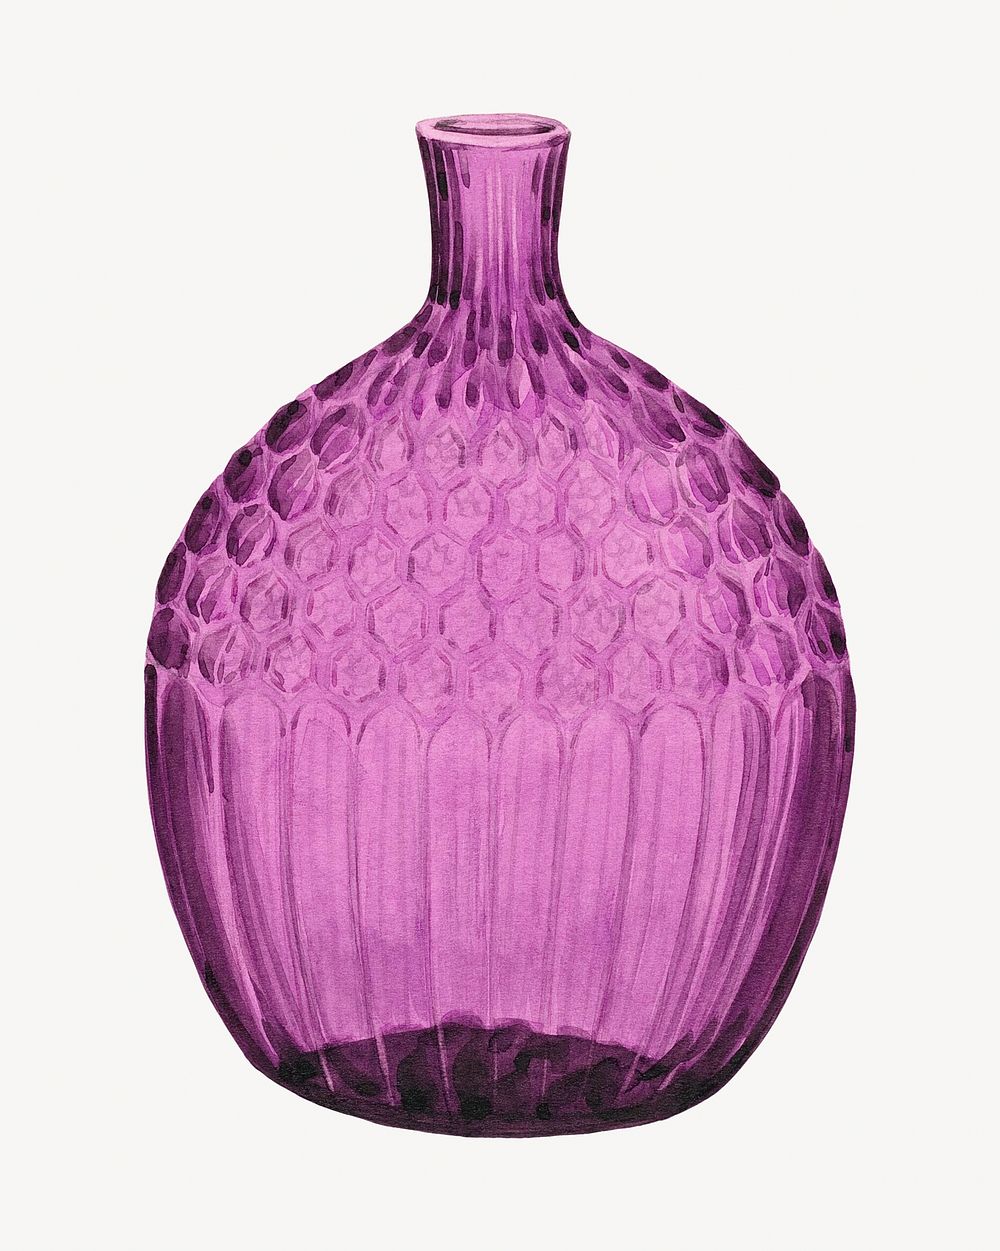 Vintage pink vase isolated vintage object on white background